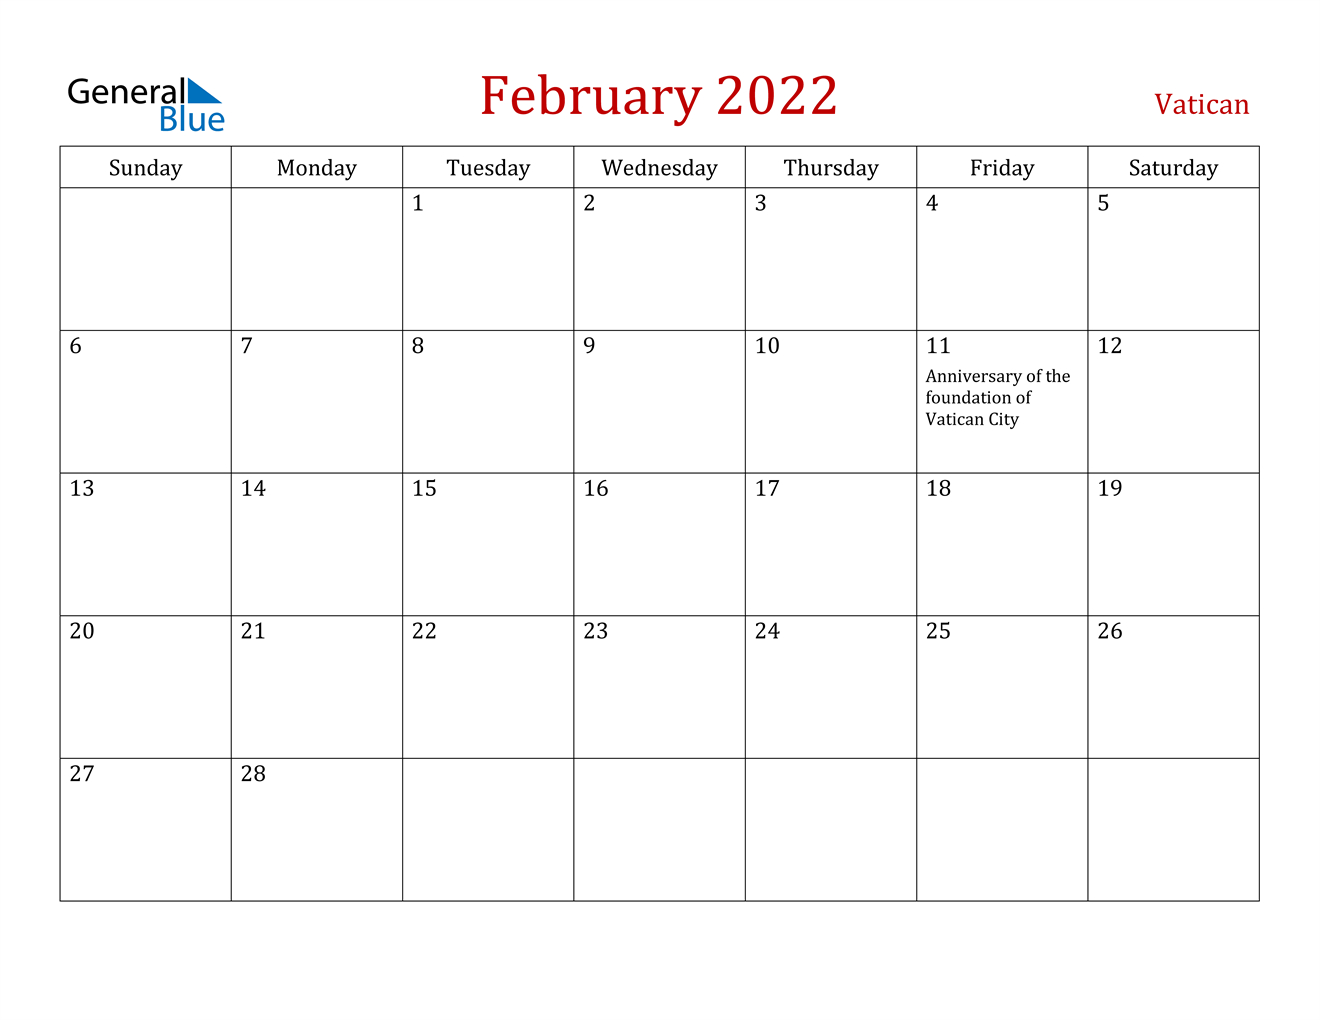 February 2022 Calendar - Vatican